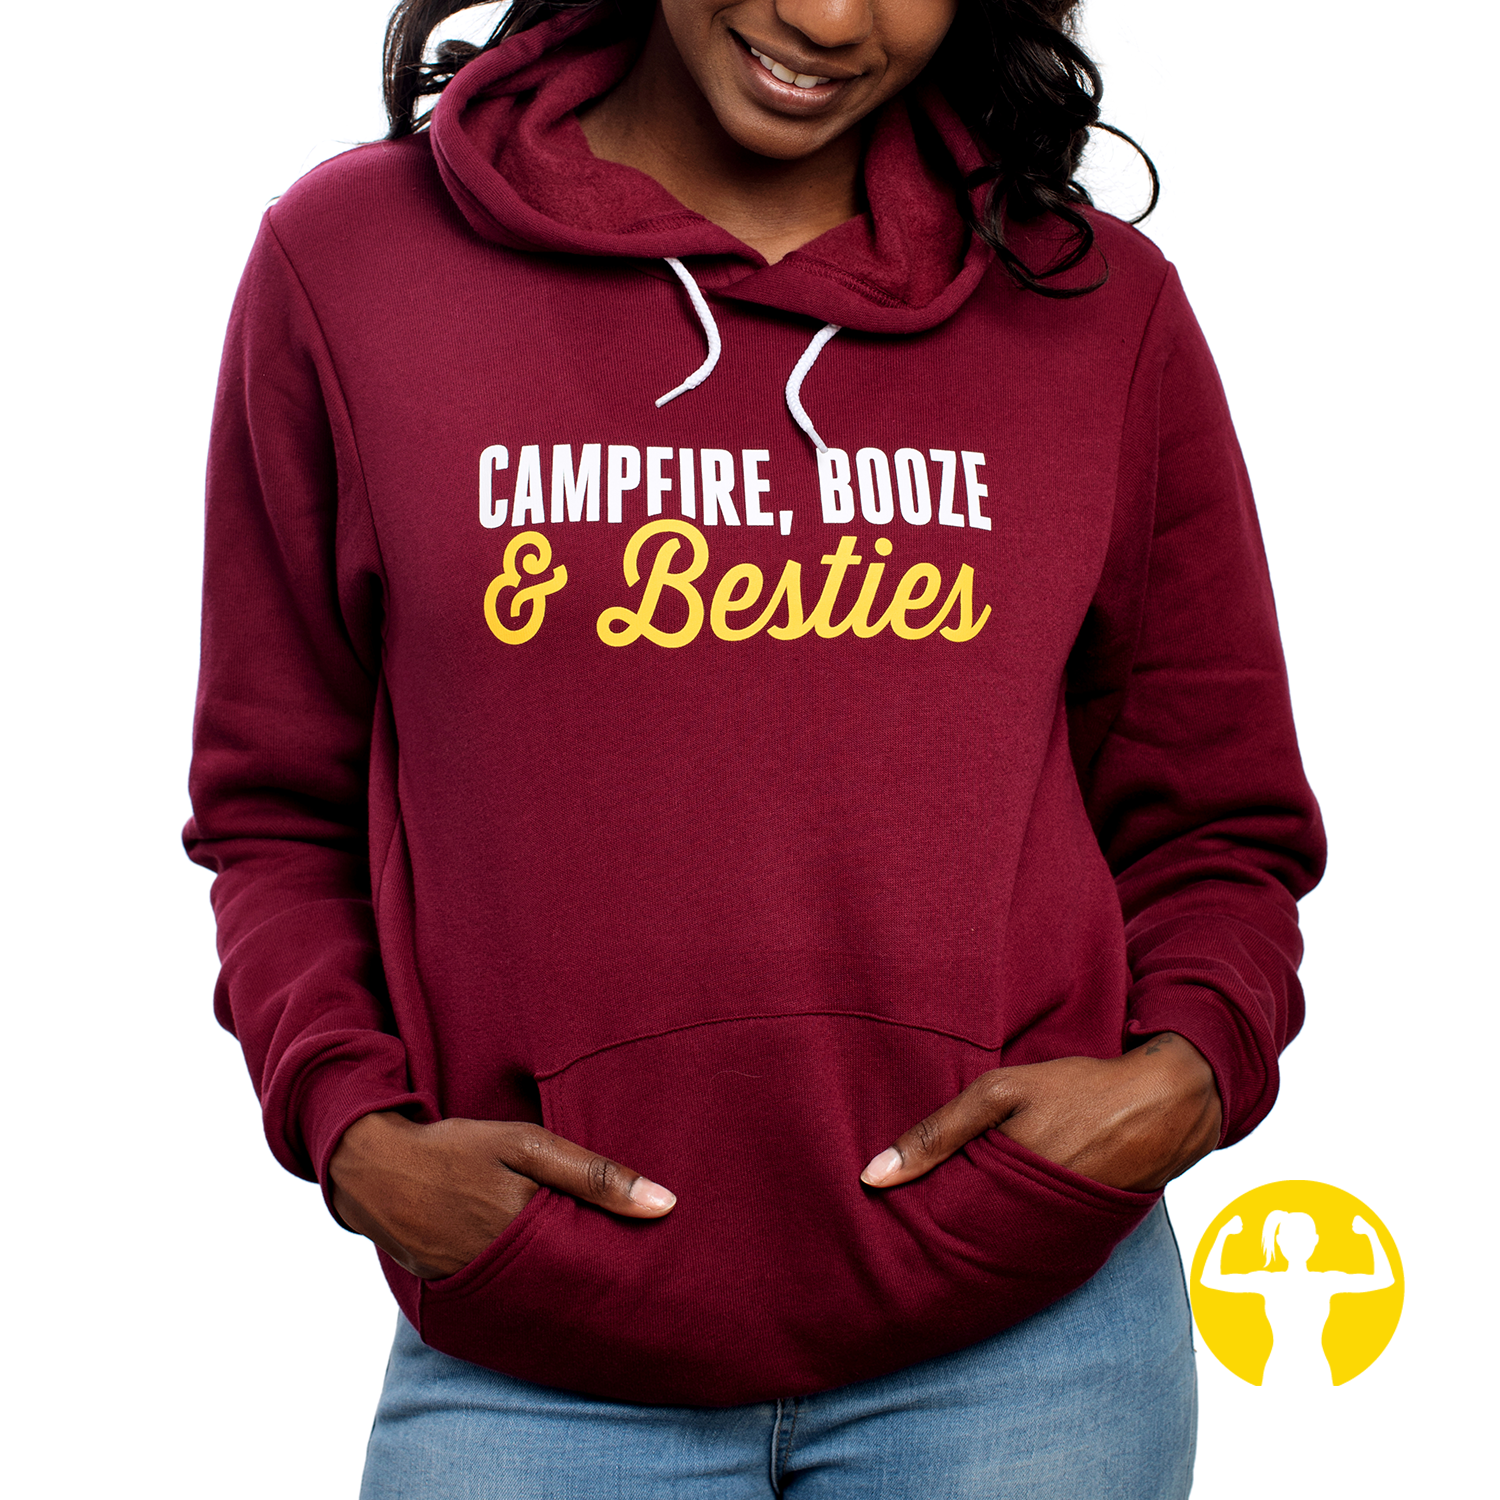 Campfire, Booze & Besties - Premium Ultra-Soft Pullover Hoodie